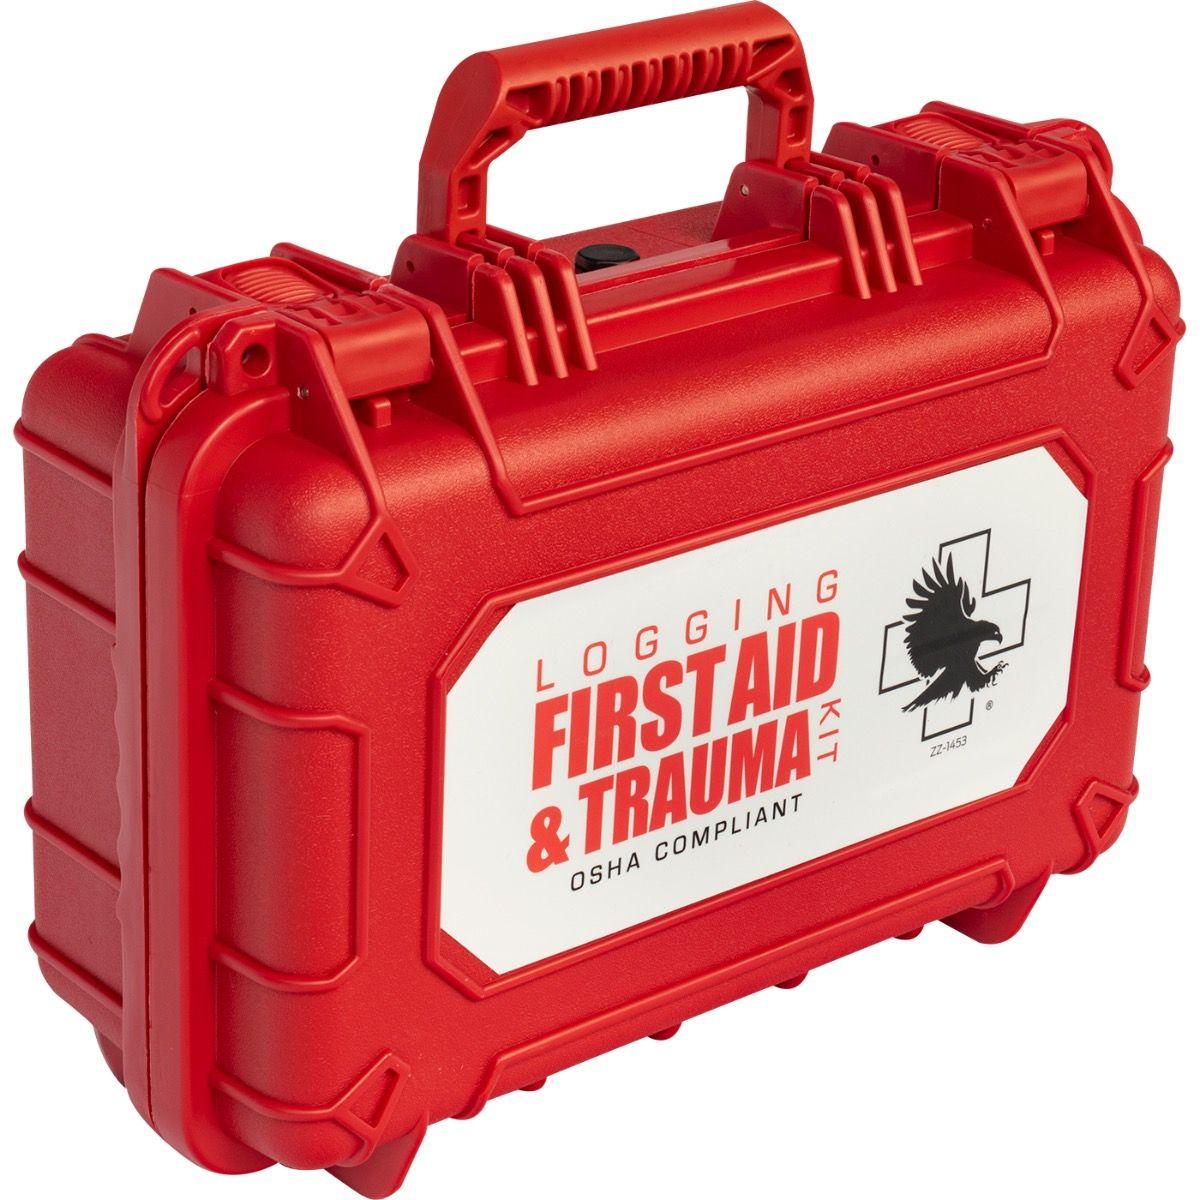 Logging First Aid & Trauma Kit - Hard Case - Vendor